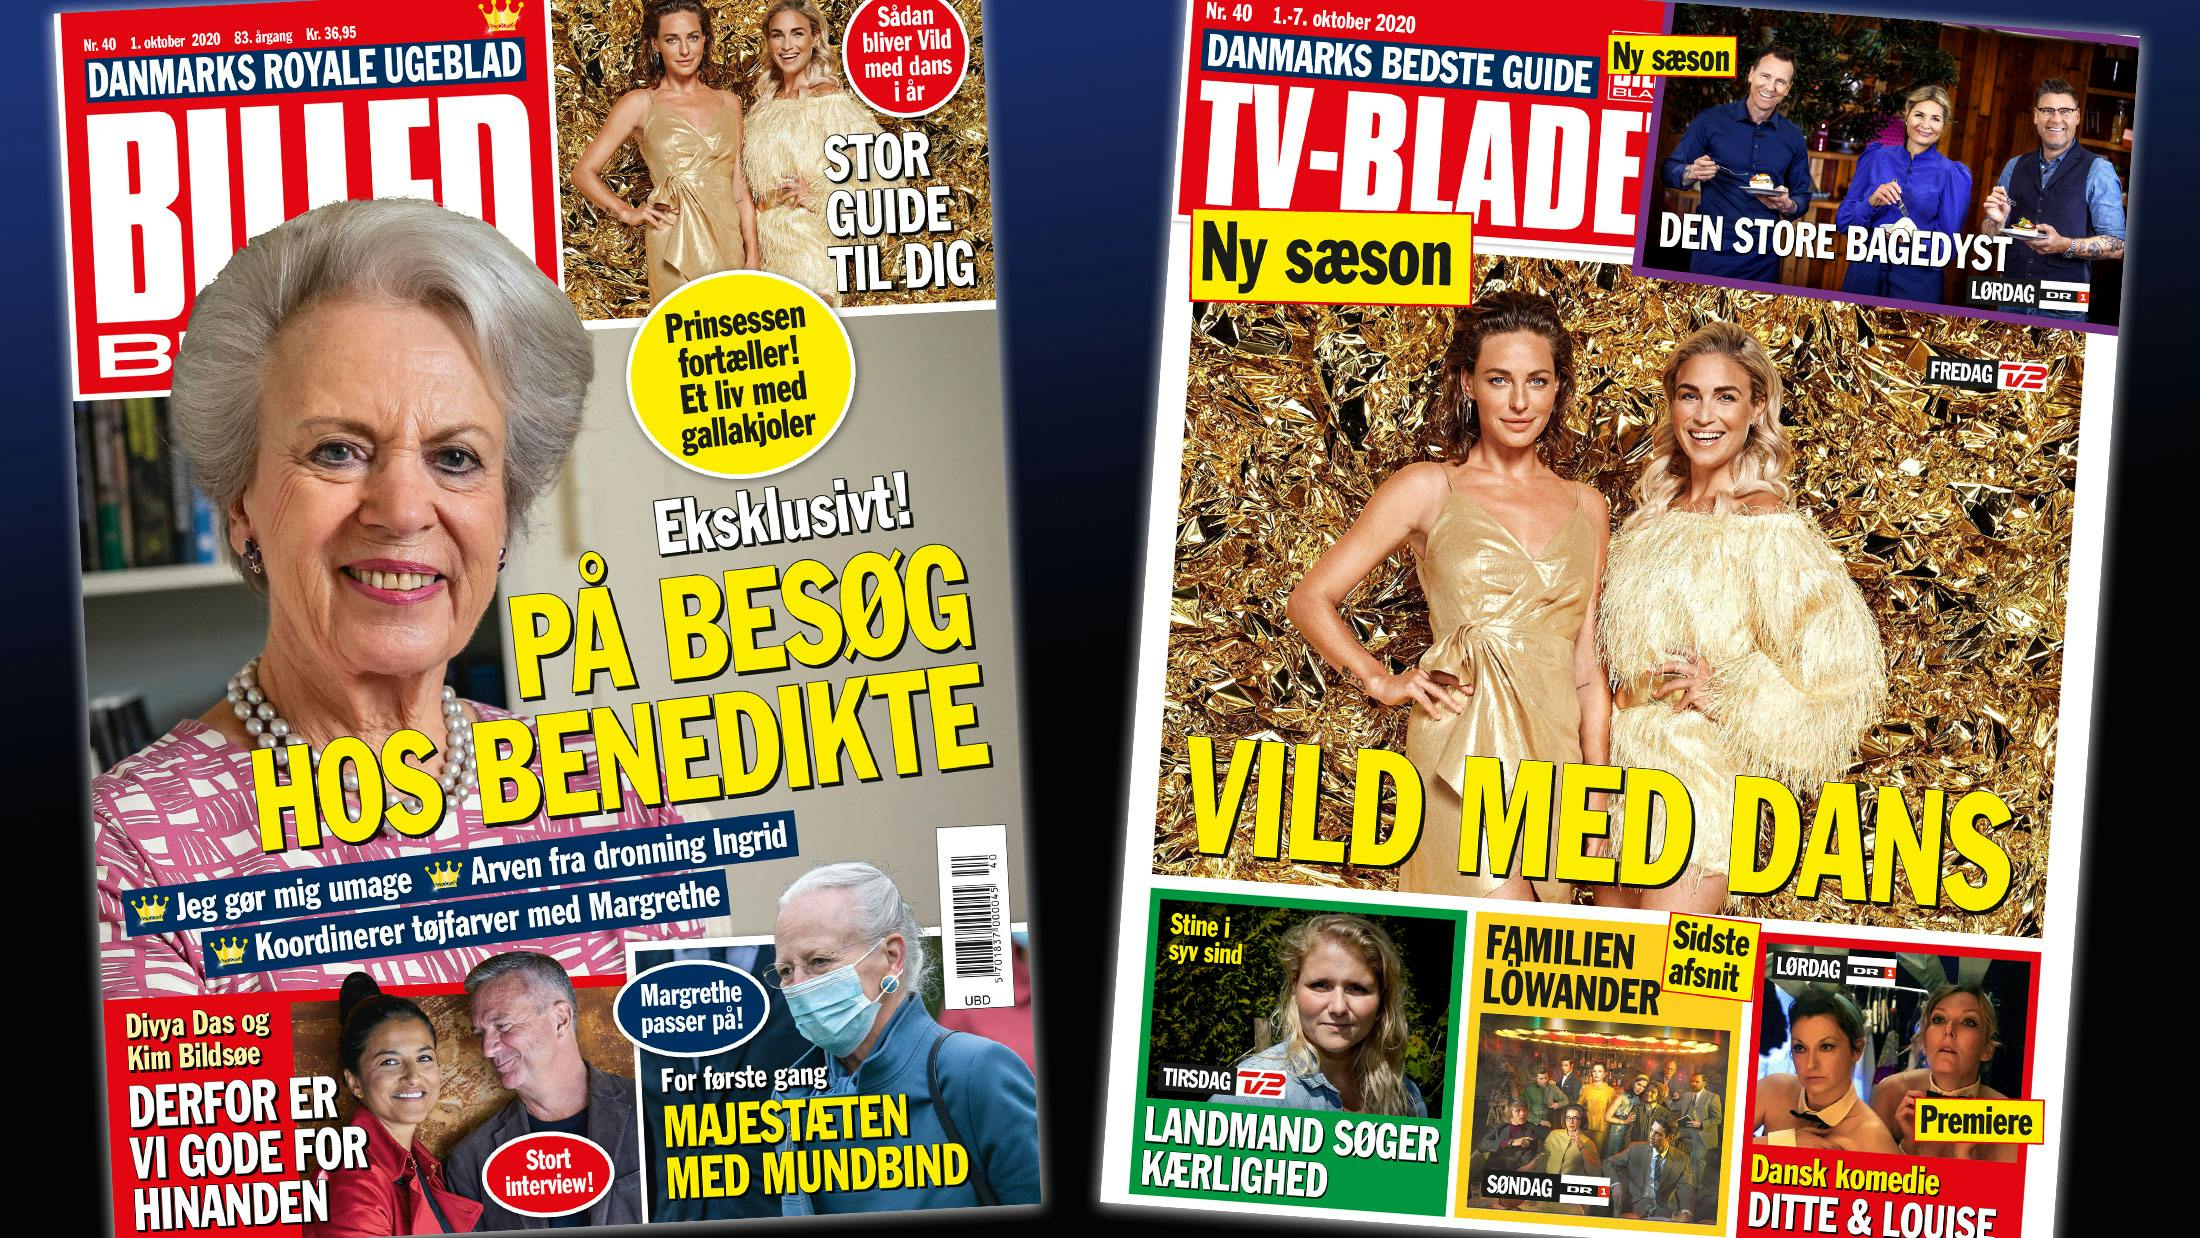 https://imgix.billedbladet.dk/media/article/webgrafik_bb409-forsider.jpg